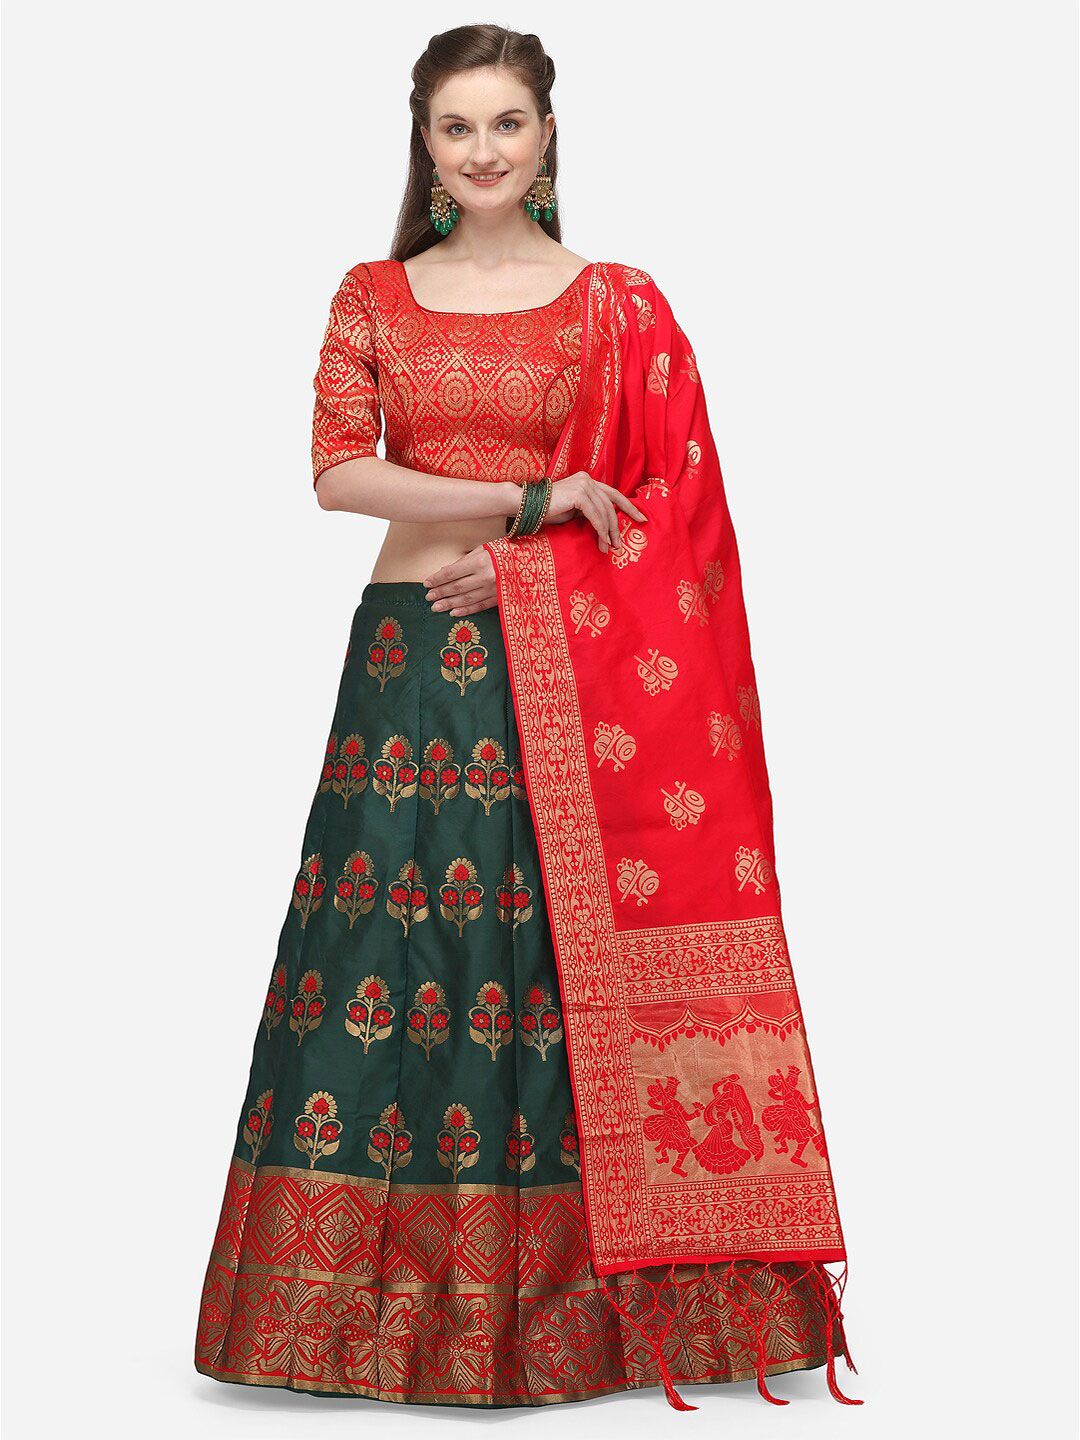 JATRIQQ Green & Red Woven Design Semi-Stitched Lehenga & Unstitched Blouse with Dupatta Price in India